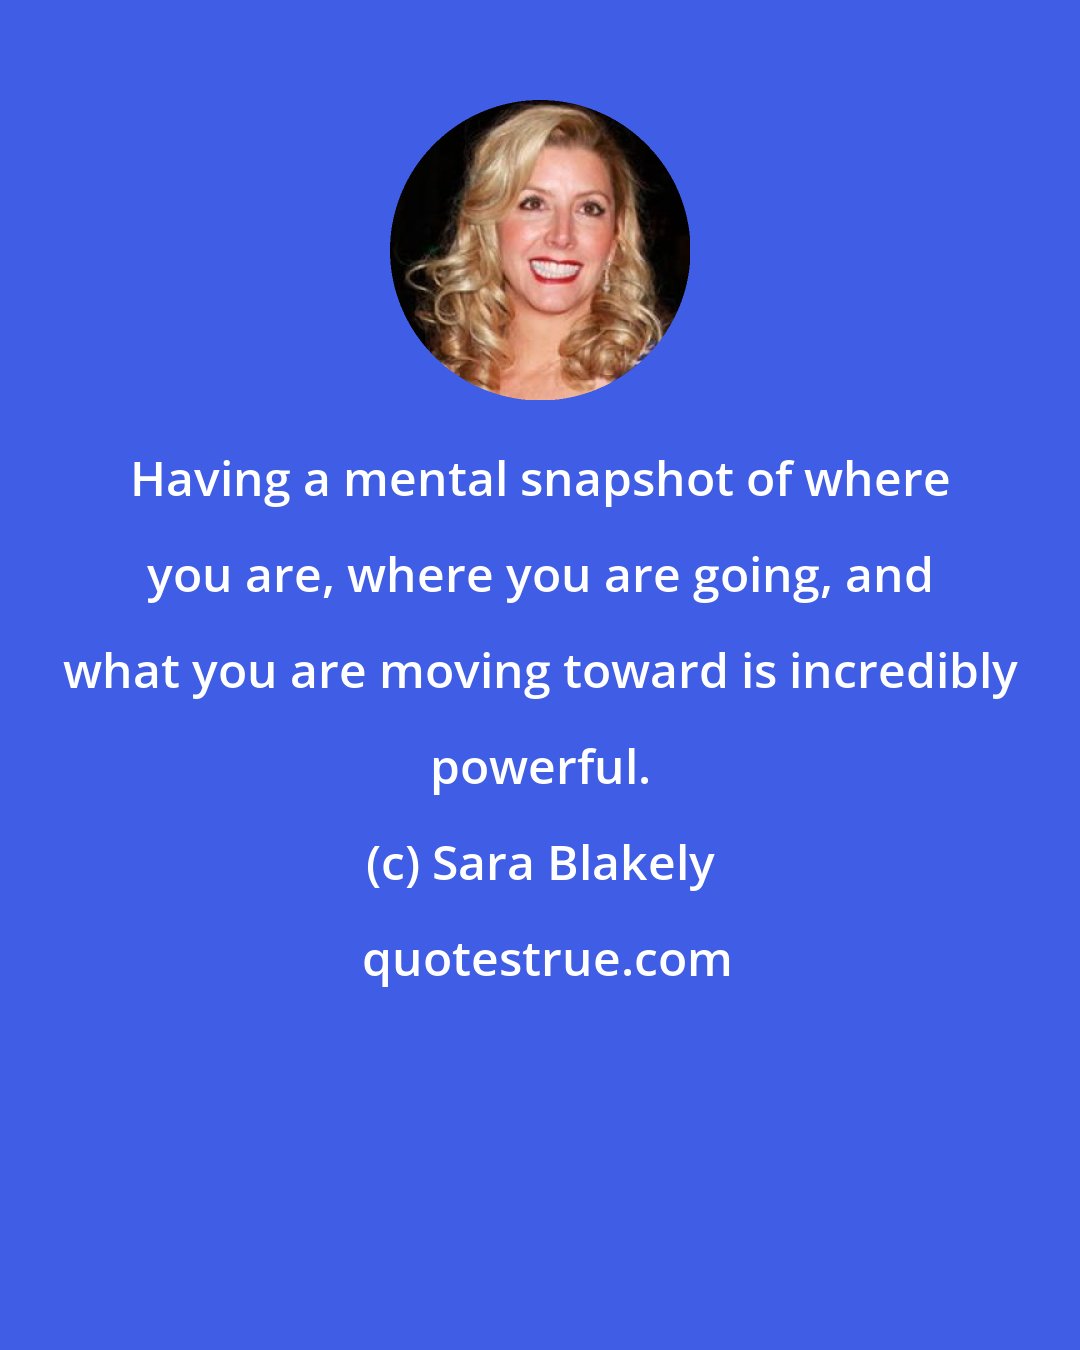 Sara Blakely: Having a mental snapshot of where you are, where you are going, and what you are moving toward is incredibly powerful.